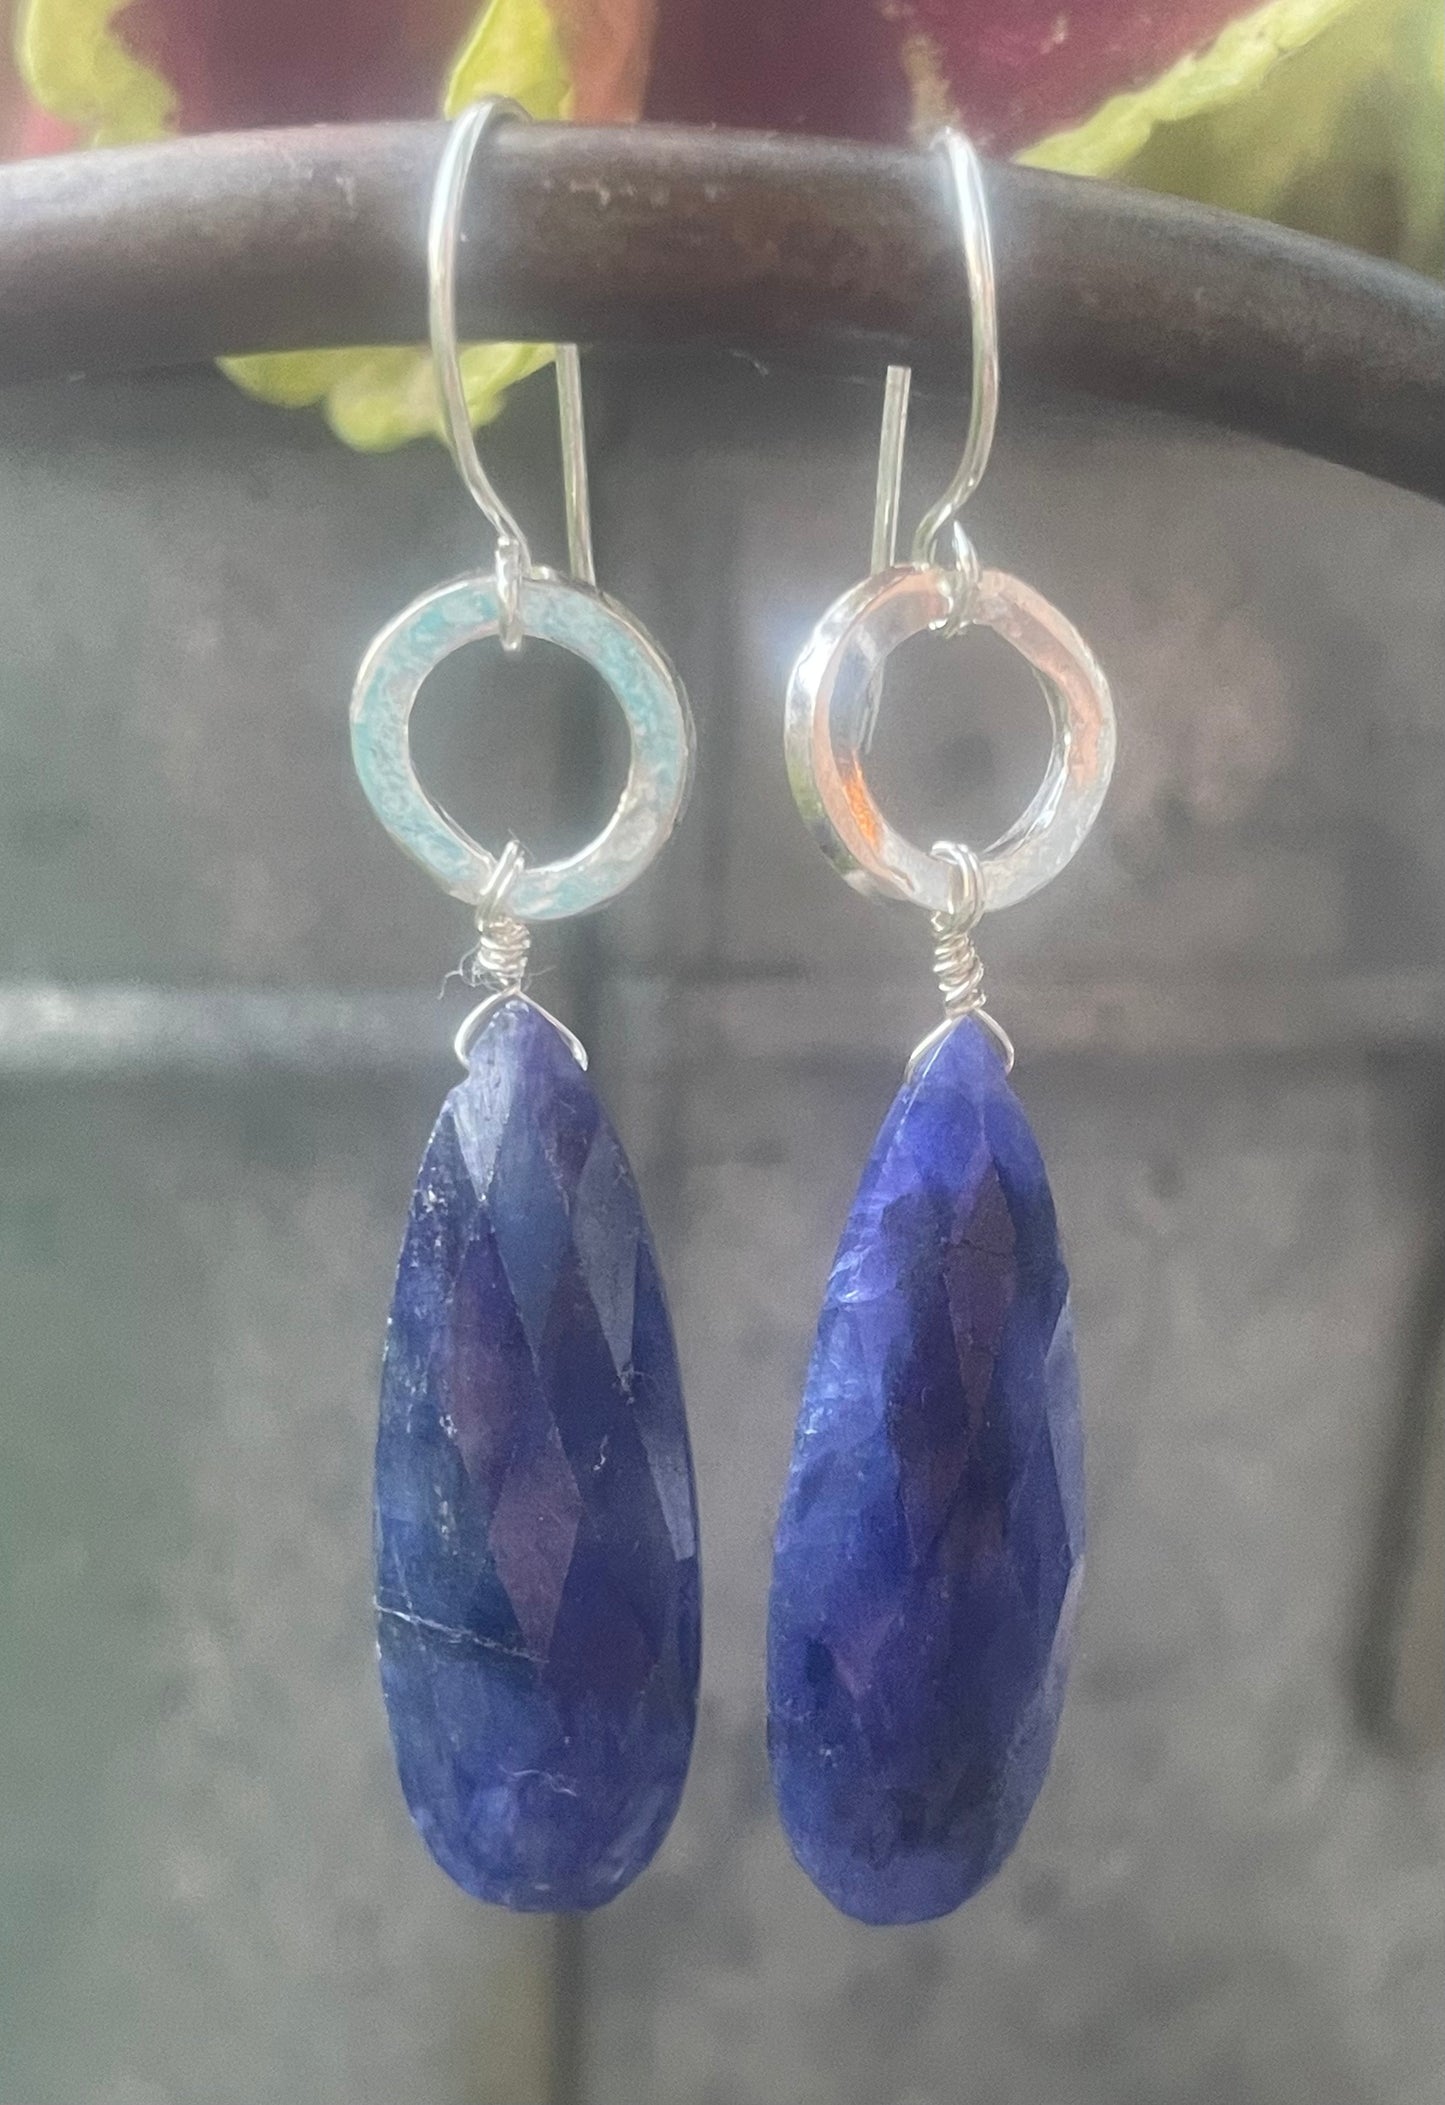 Blue Lab created sapphire earrings